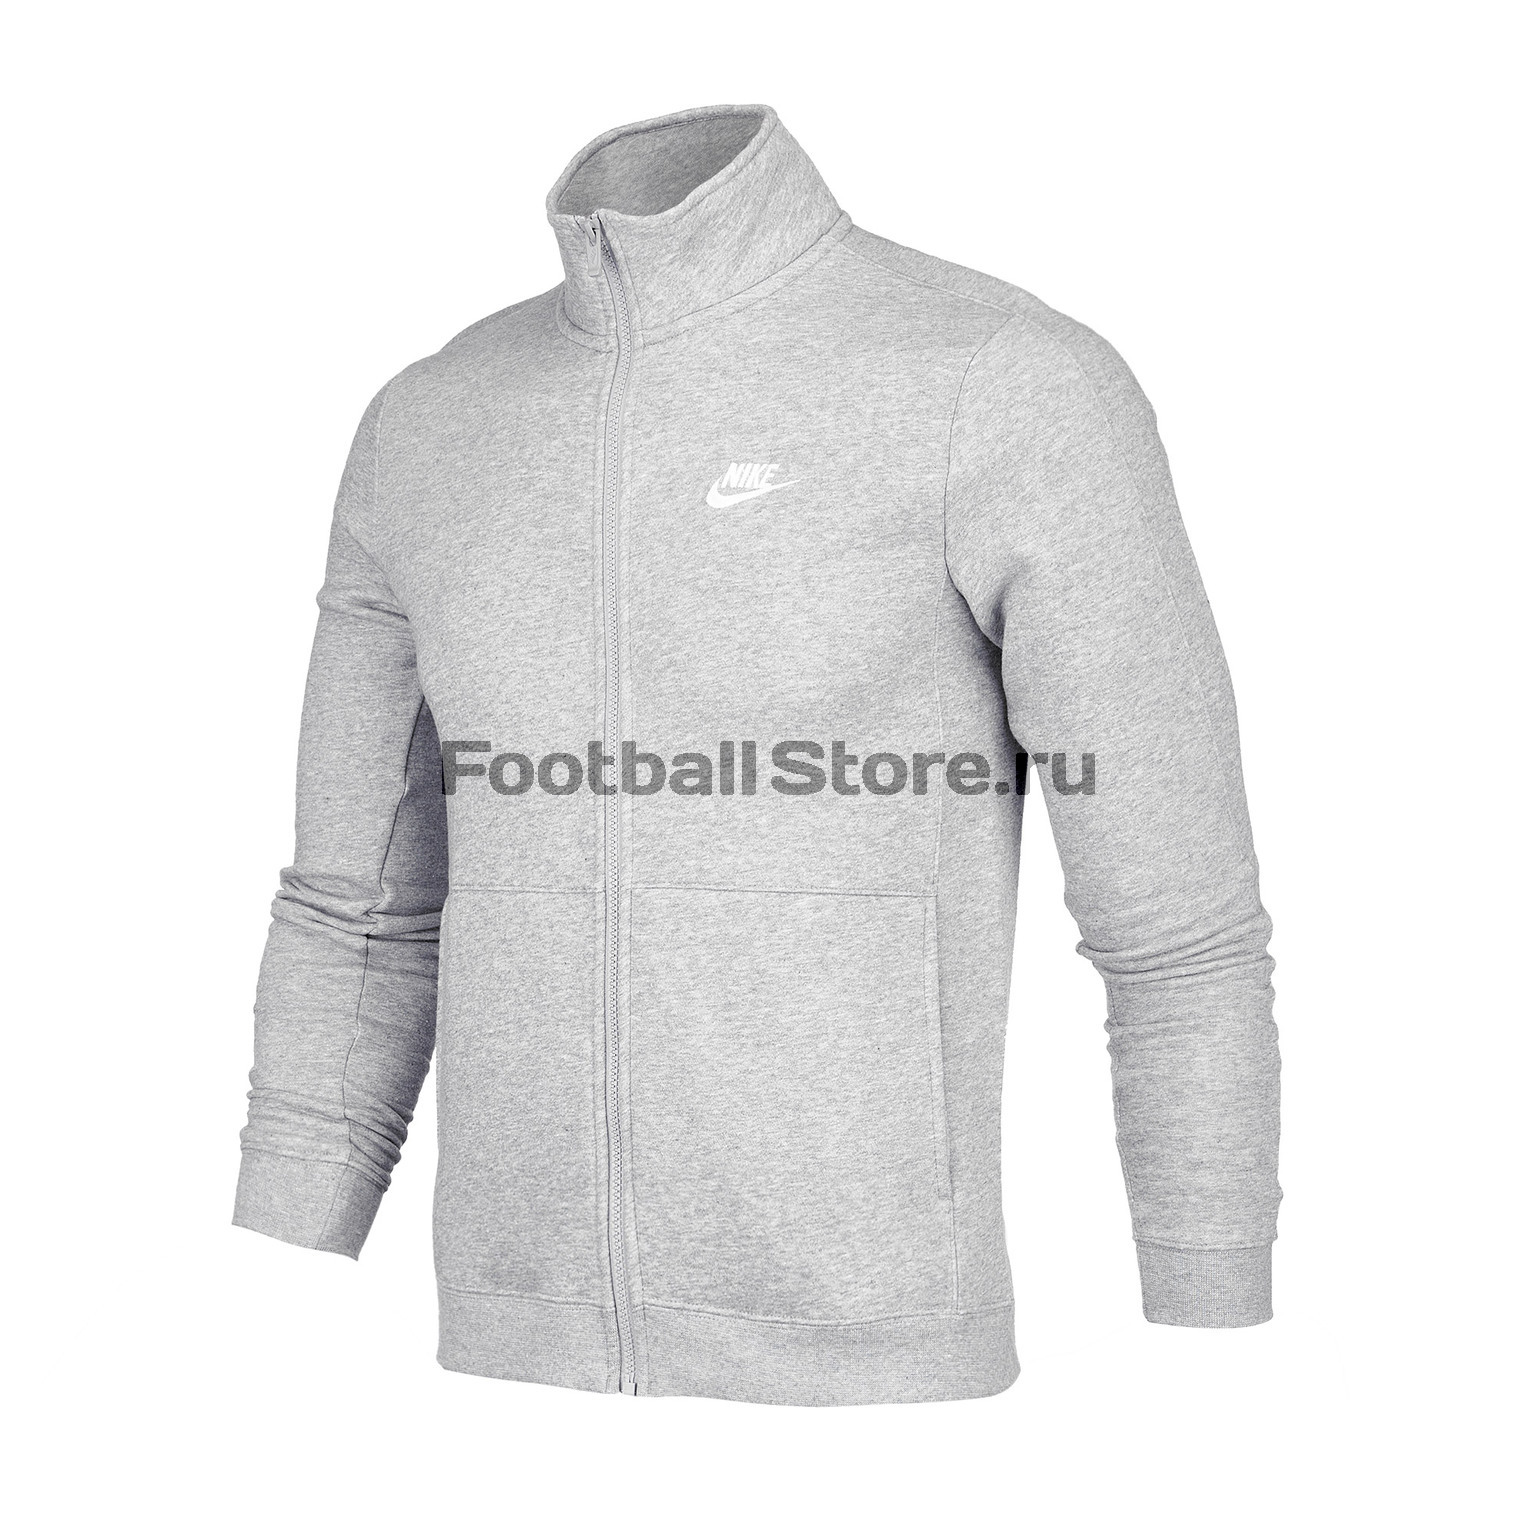 Костюм спортивный Nike CE Suit Fleece 928125-063